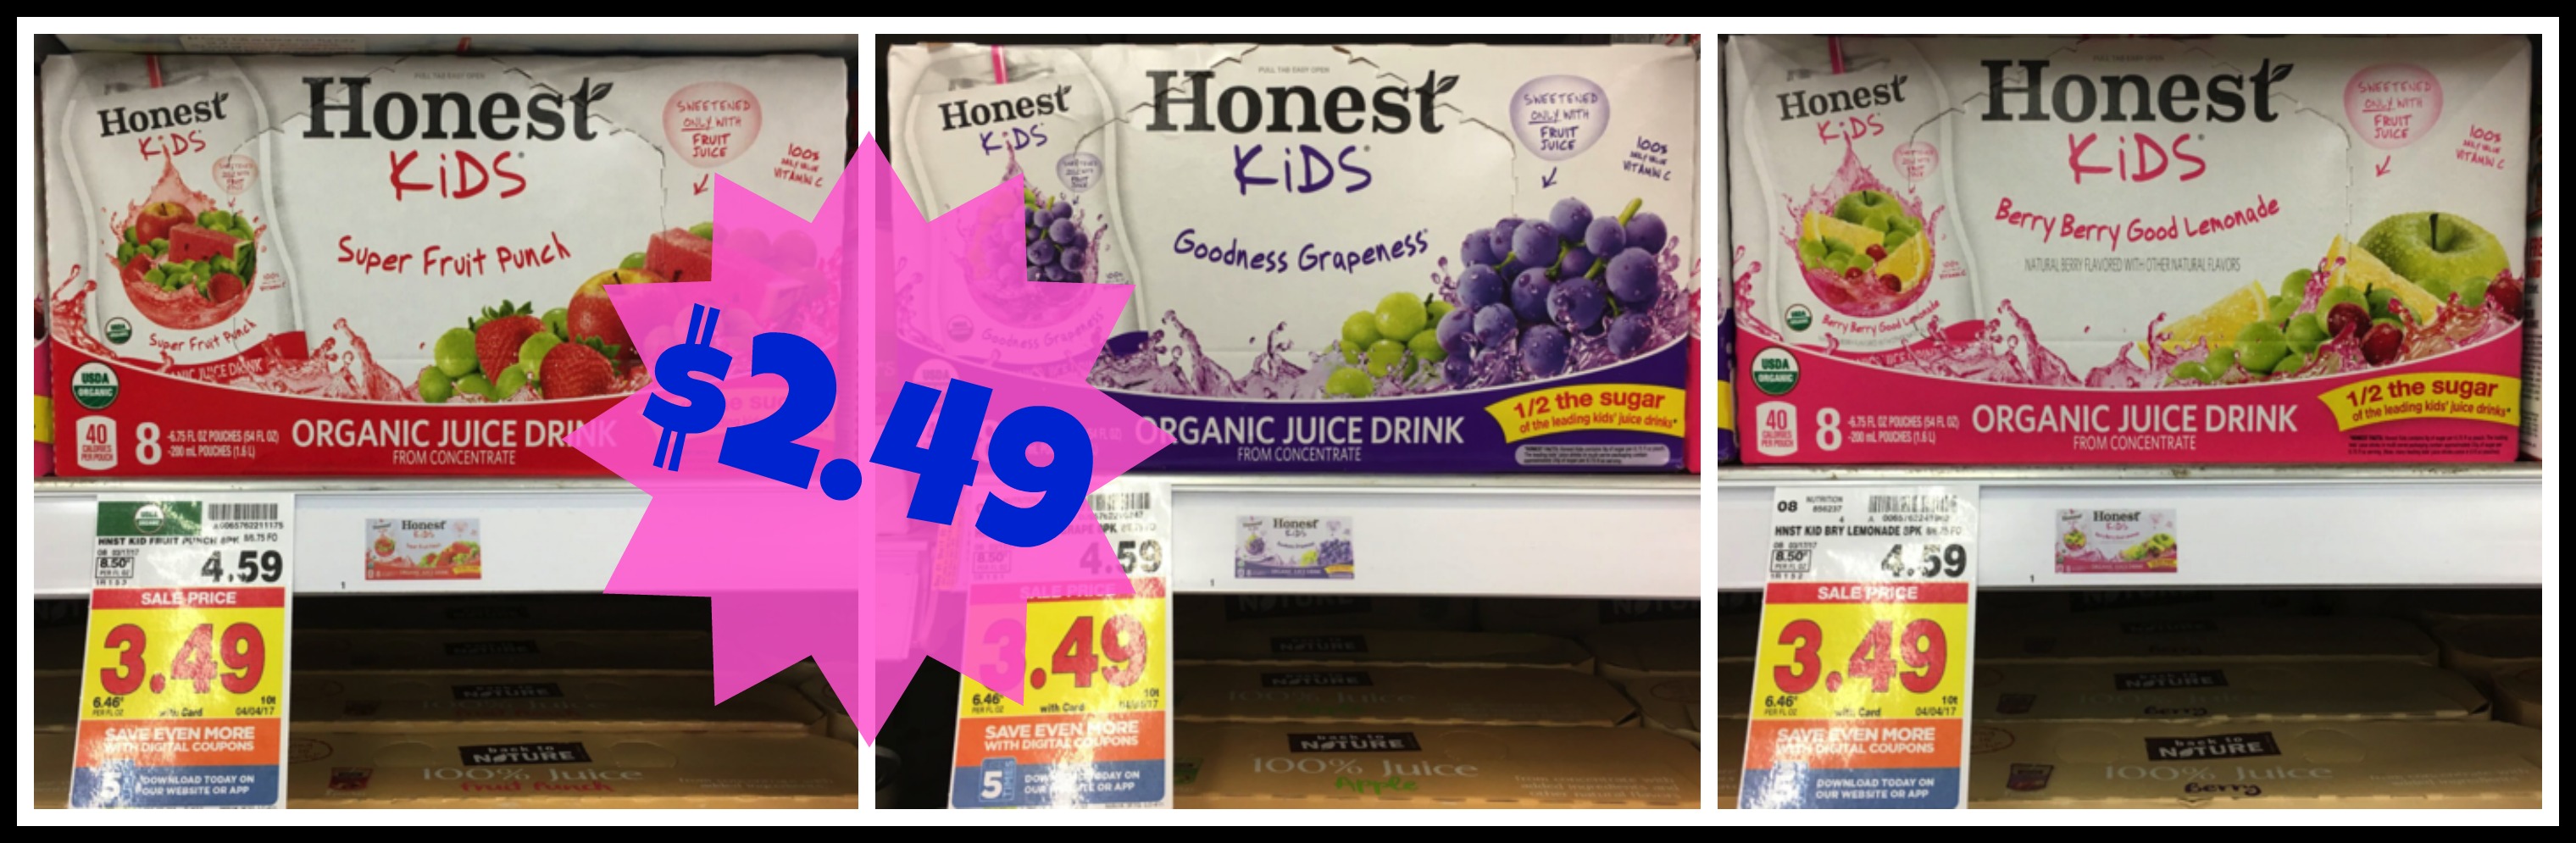 honest kids organic juice Image